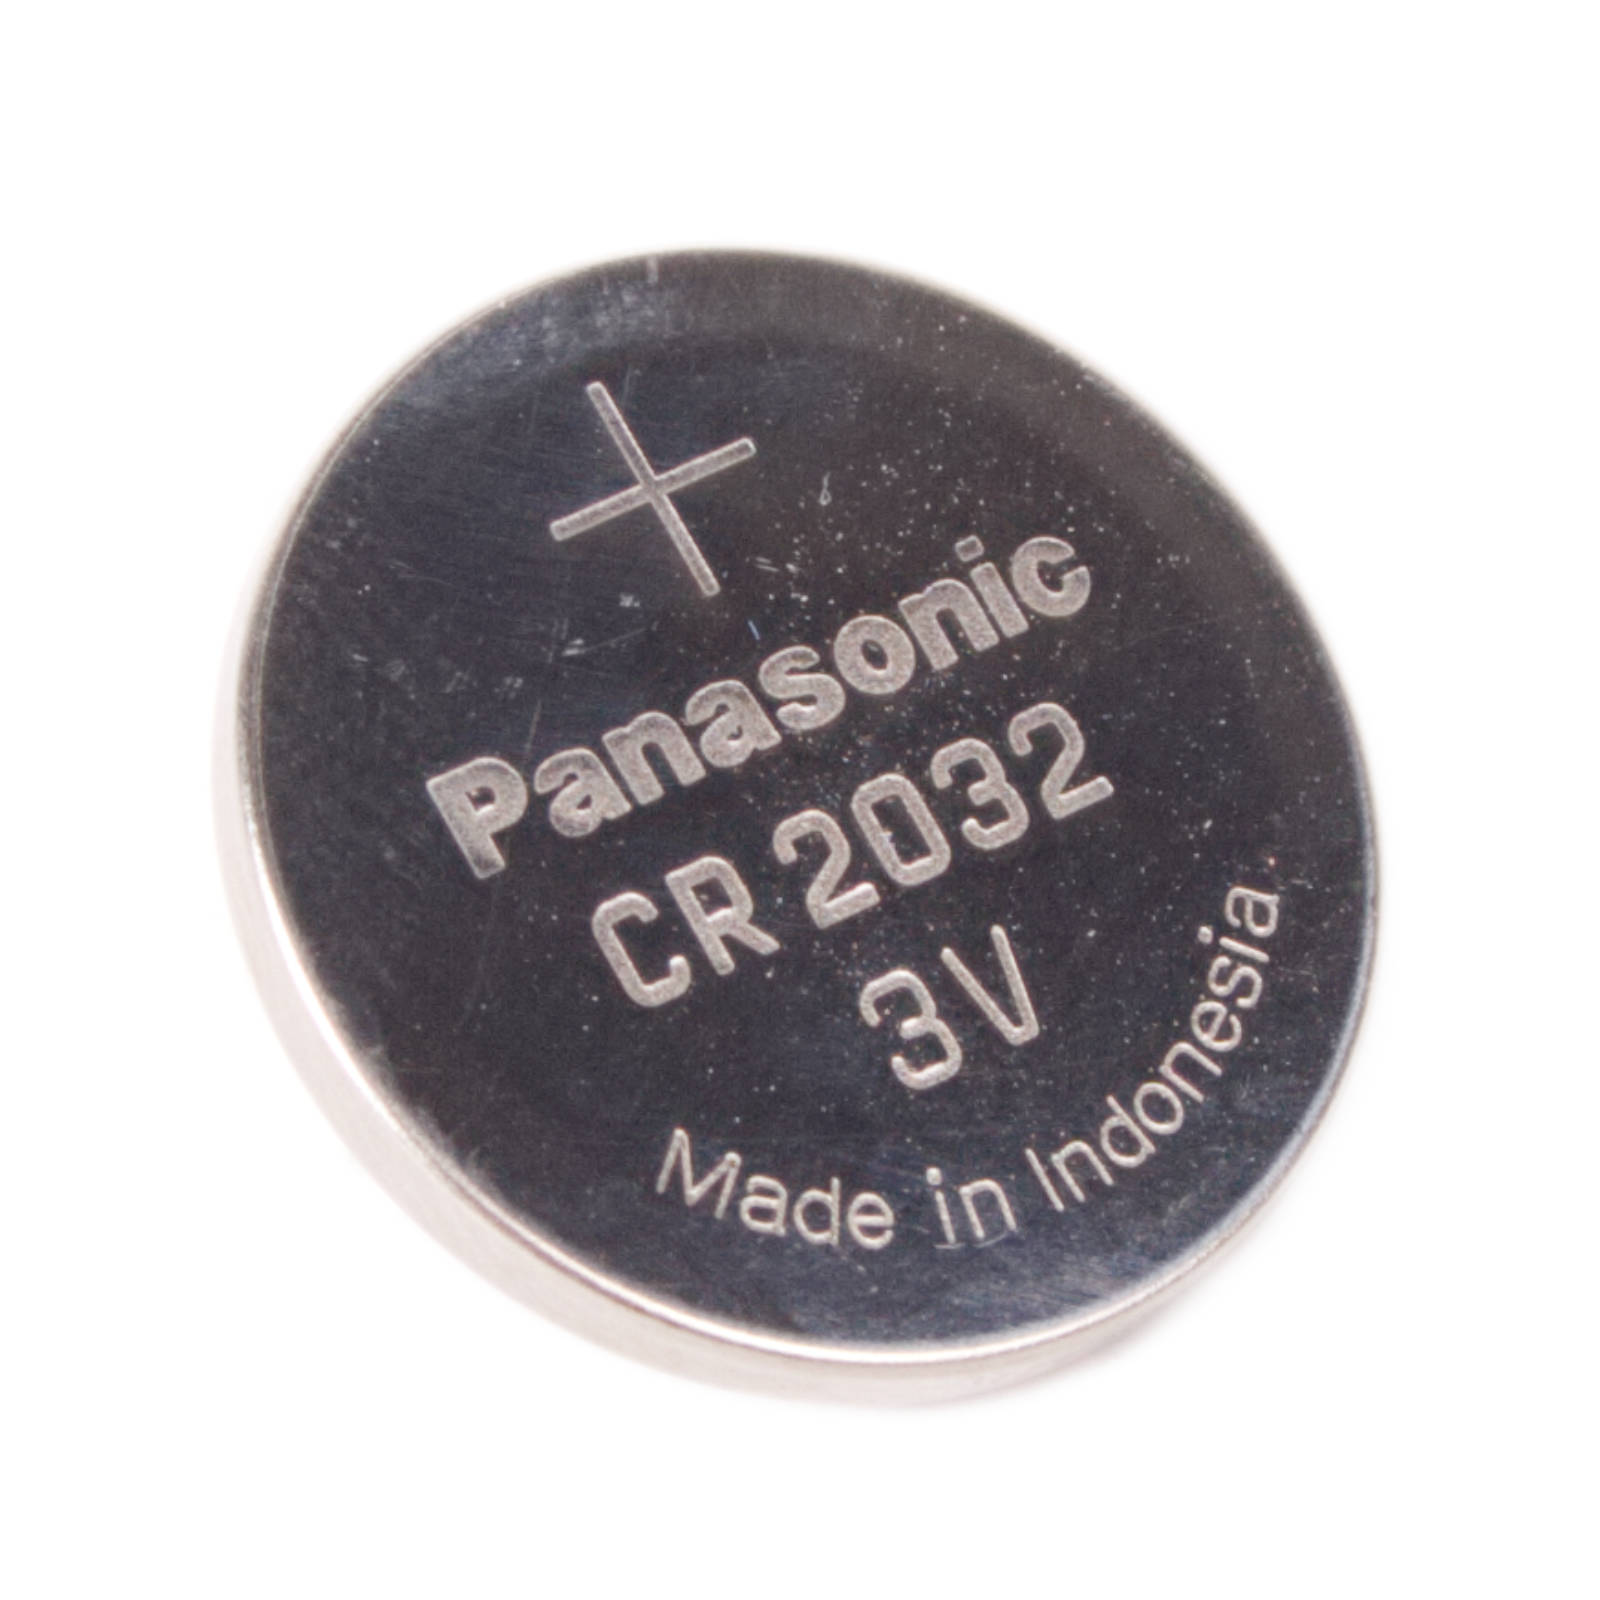 CR2032 PANASONIC Knopfzelle Lithium